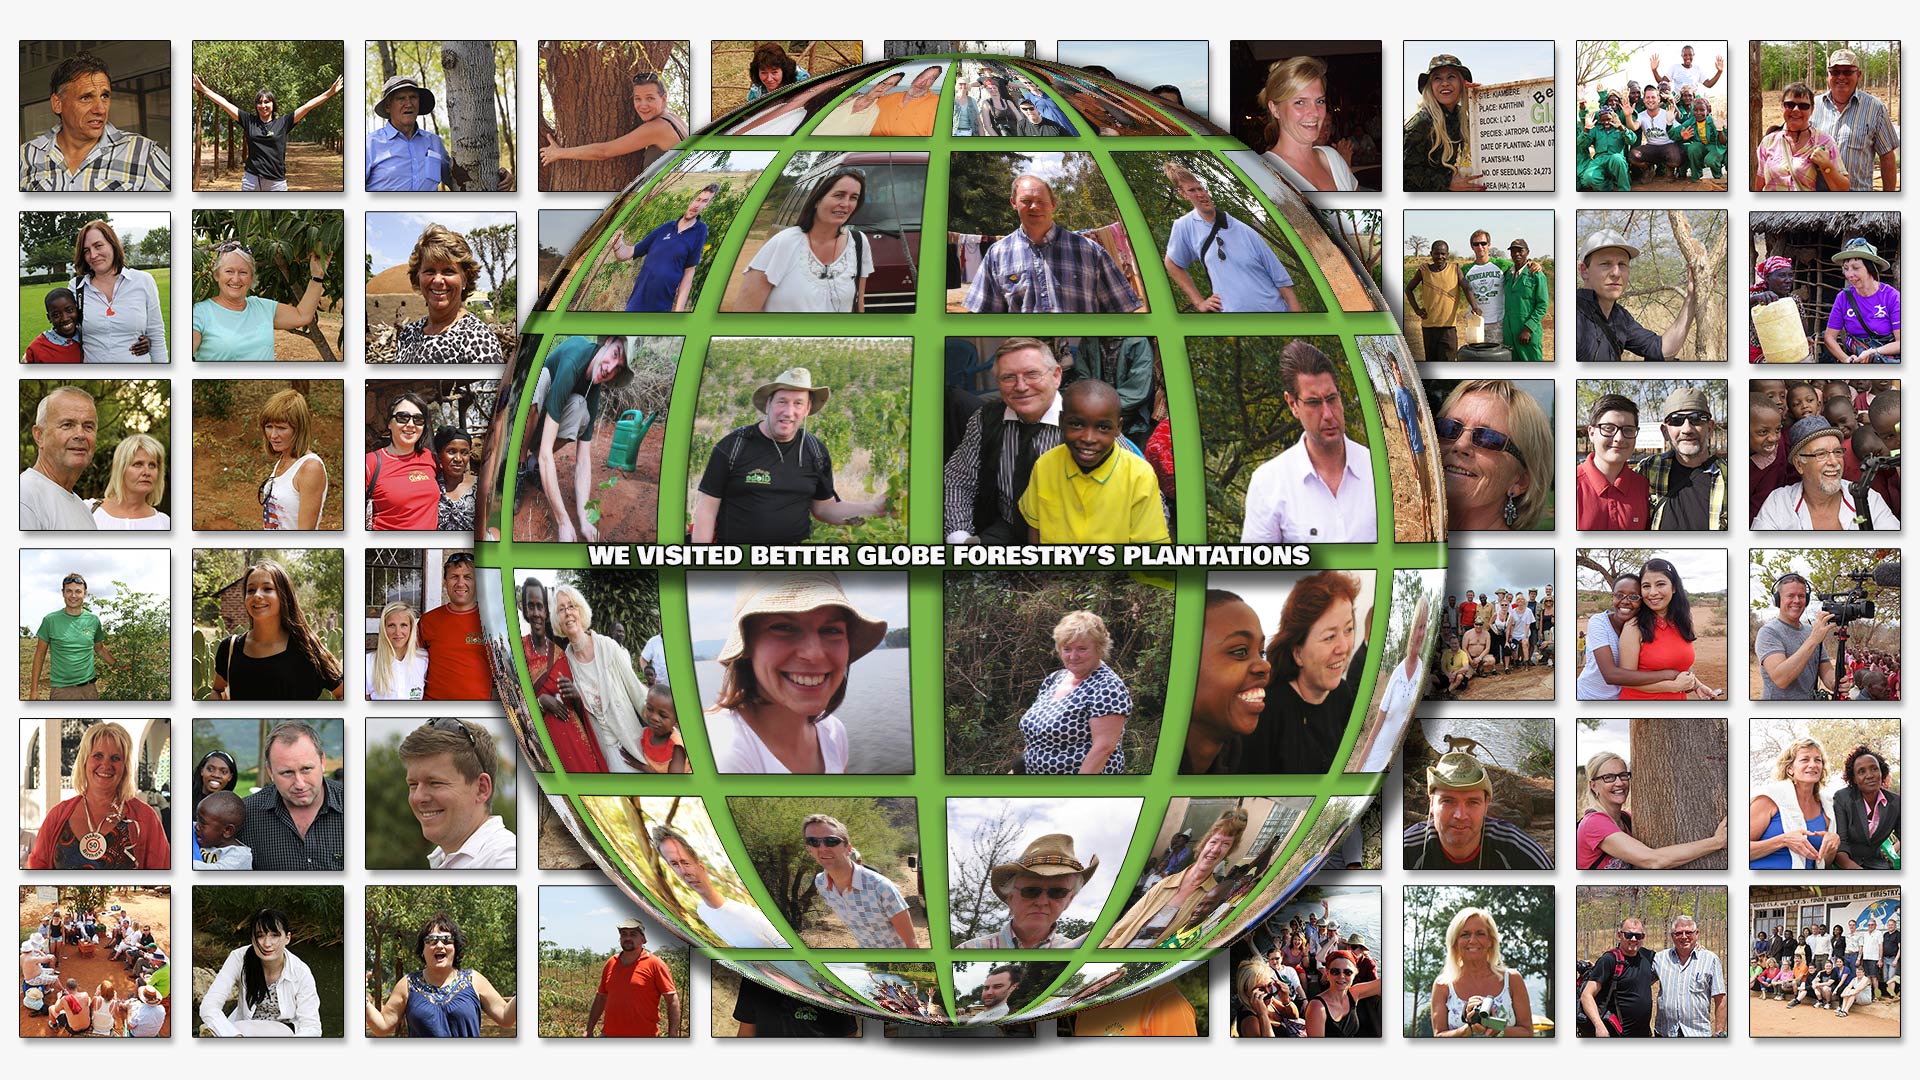 Better Globe customers visiting Better Globe Forestry's plantations in Kenya